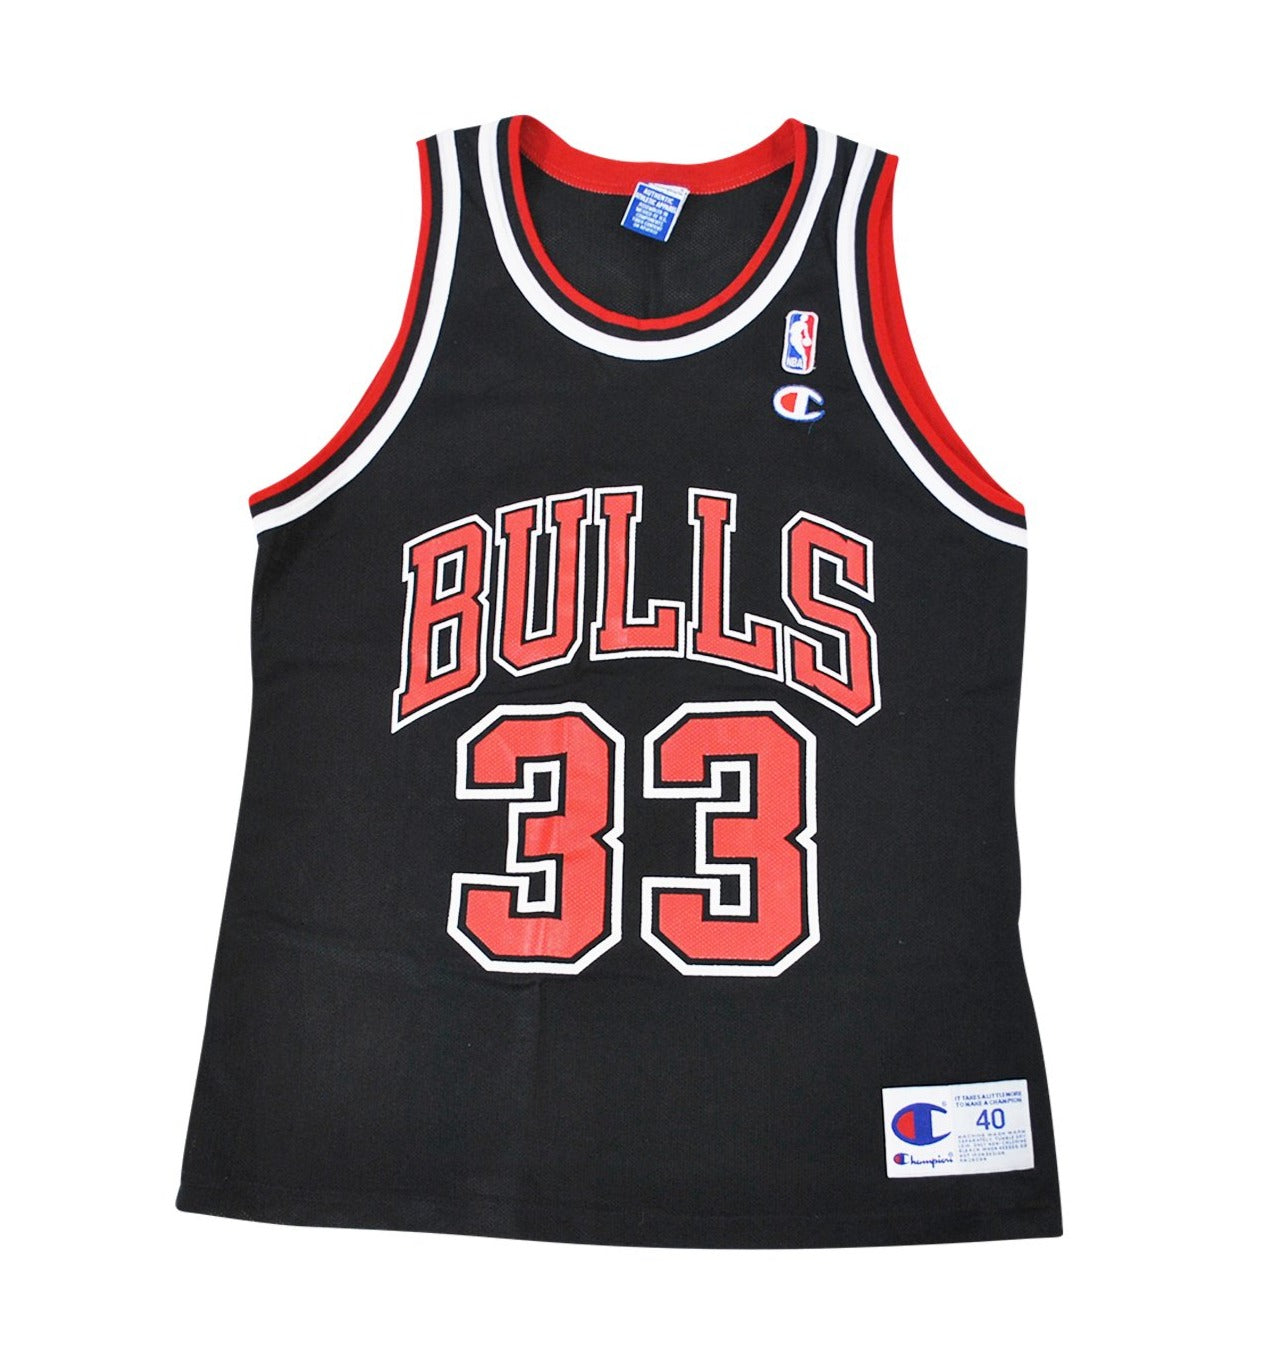 VTG Champion Scottie Pippen Chicago Bulls Jersey 33 Black 